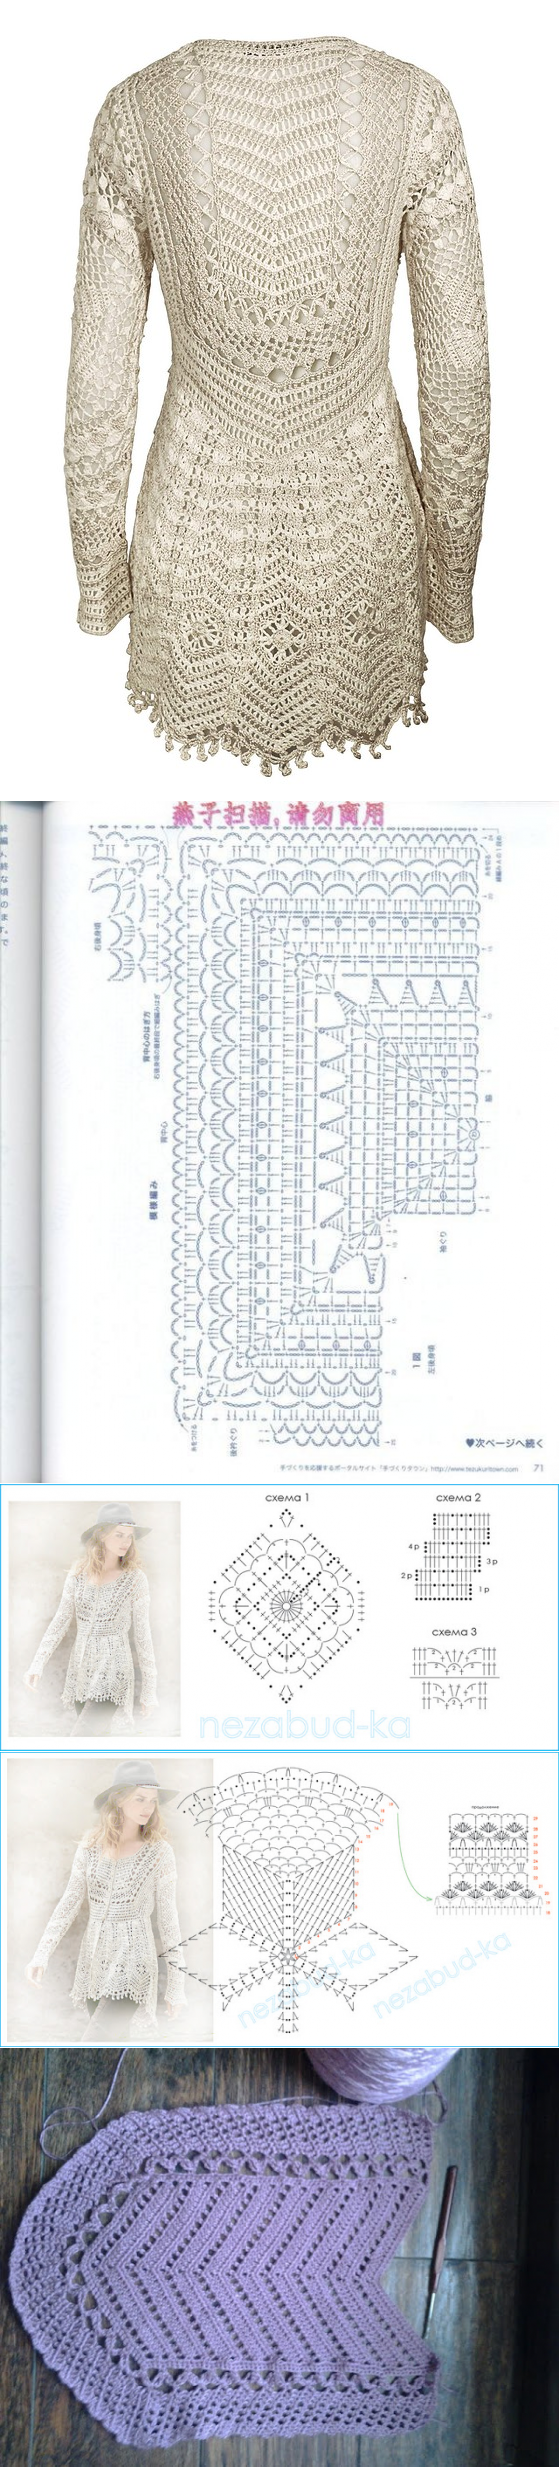 ergahandmade: Crochet Cardigan +Diagrams